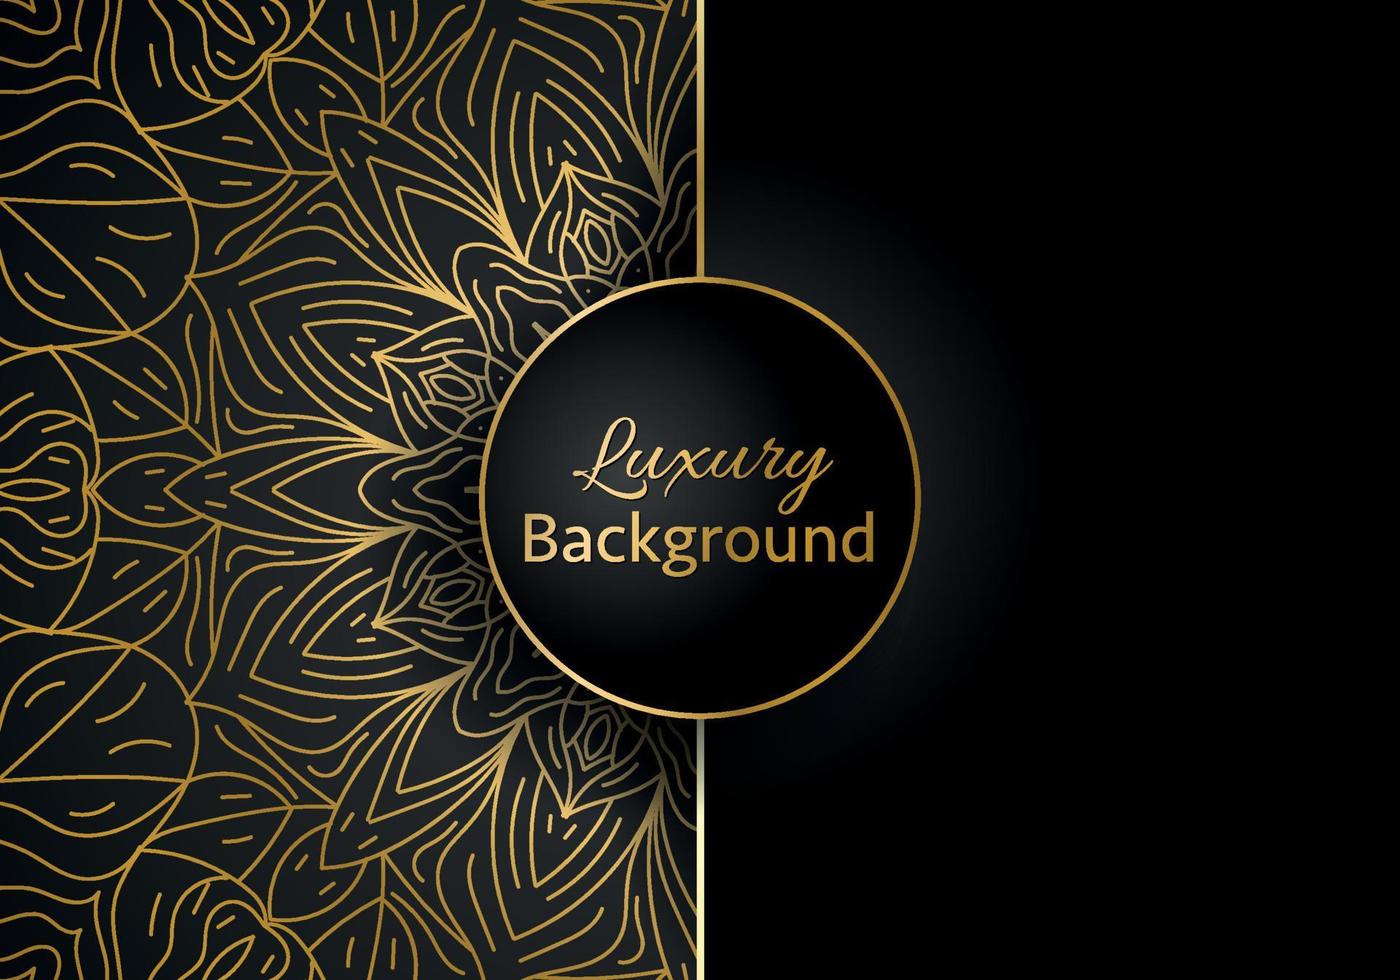 Luxury vector mandala background design with golden color pattern. Vector ornamental mandala design.